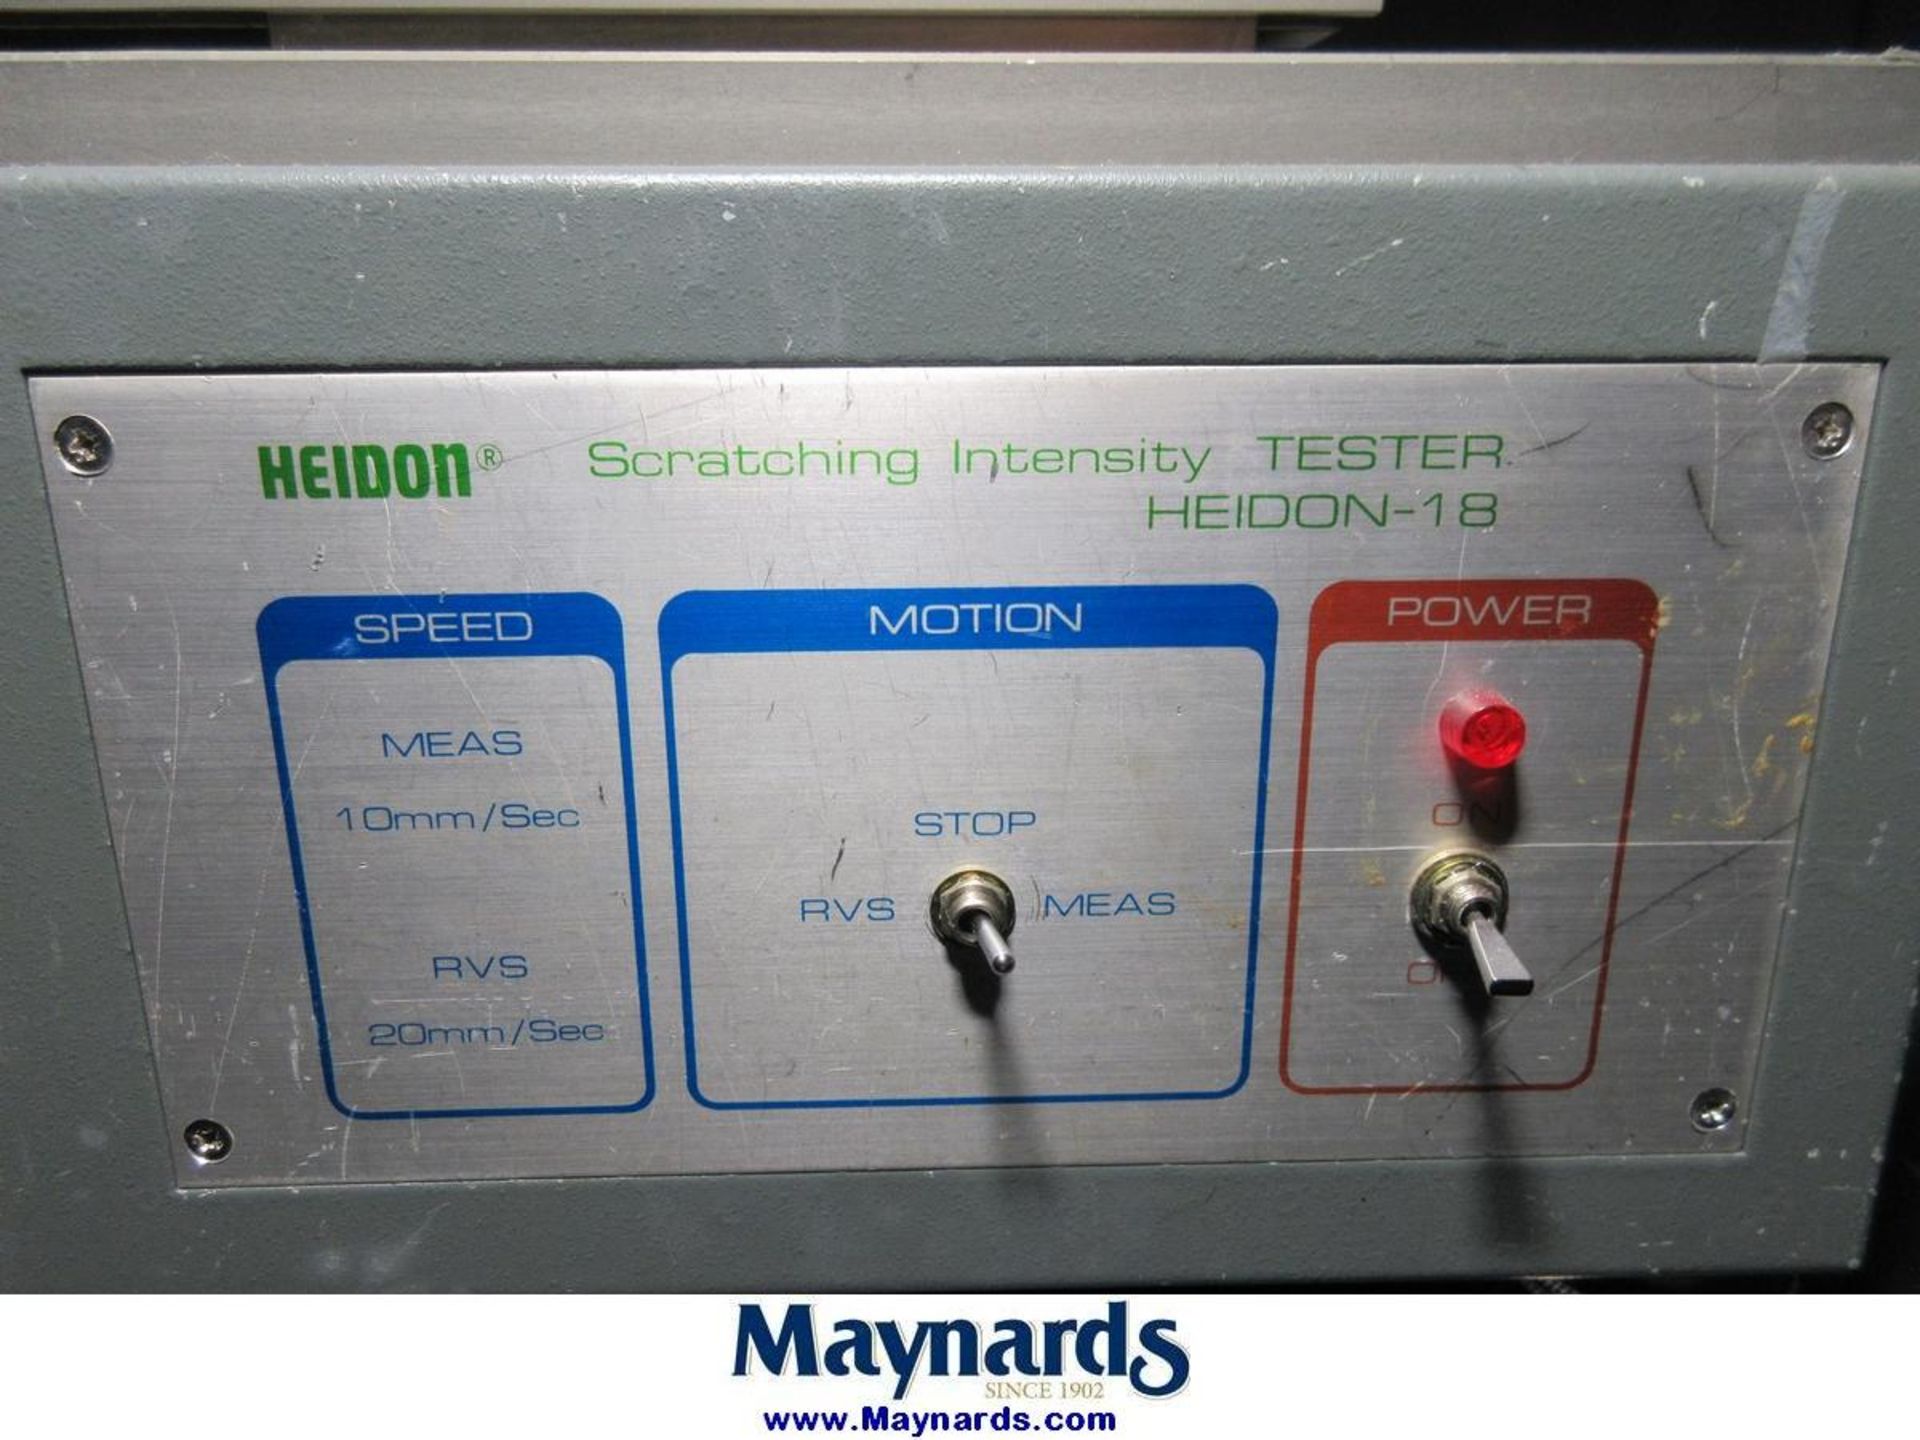 Heidon Heidon-18 Scratching Intensity Tester - Image 6 of 6